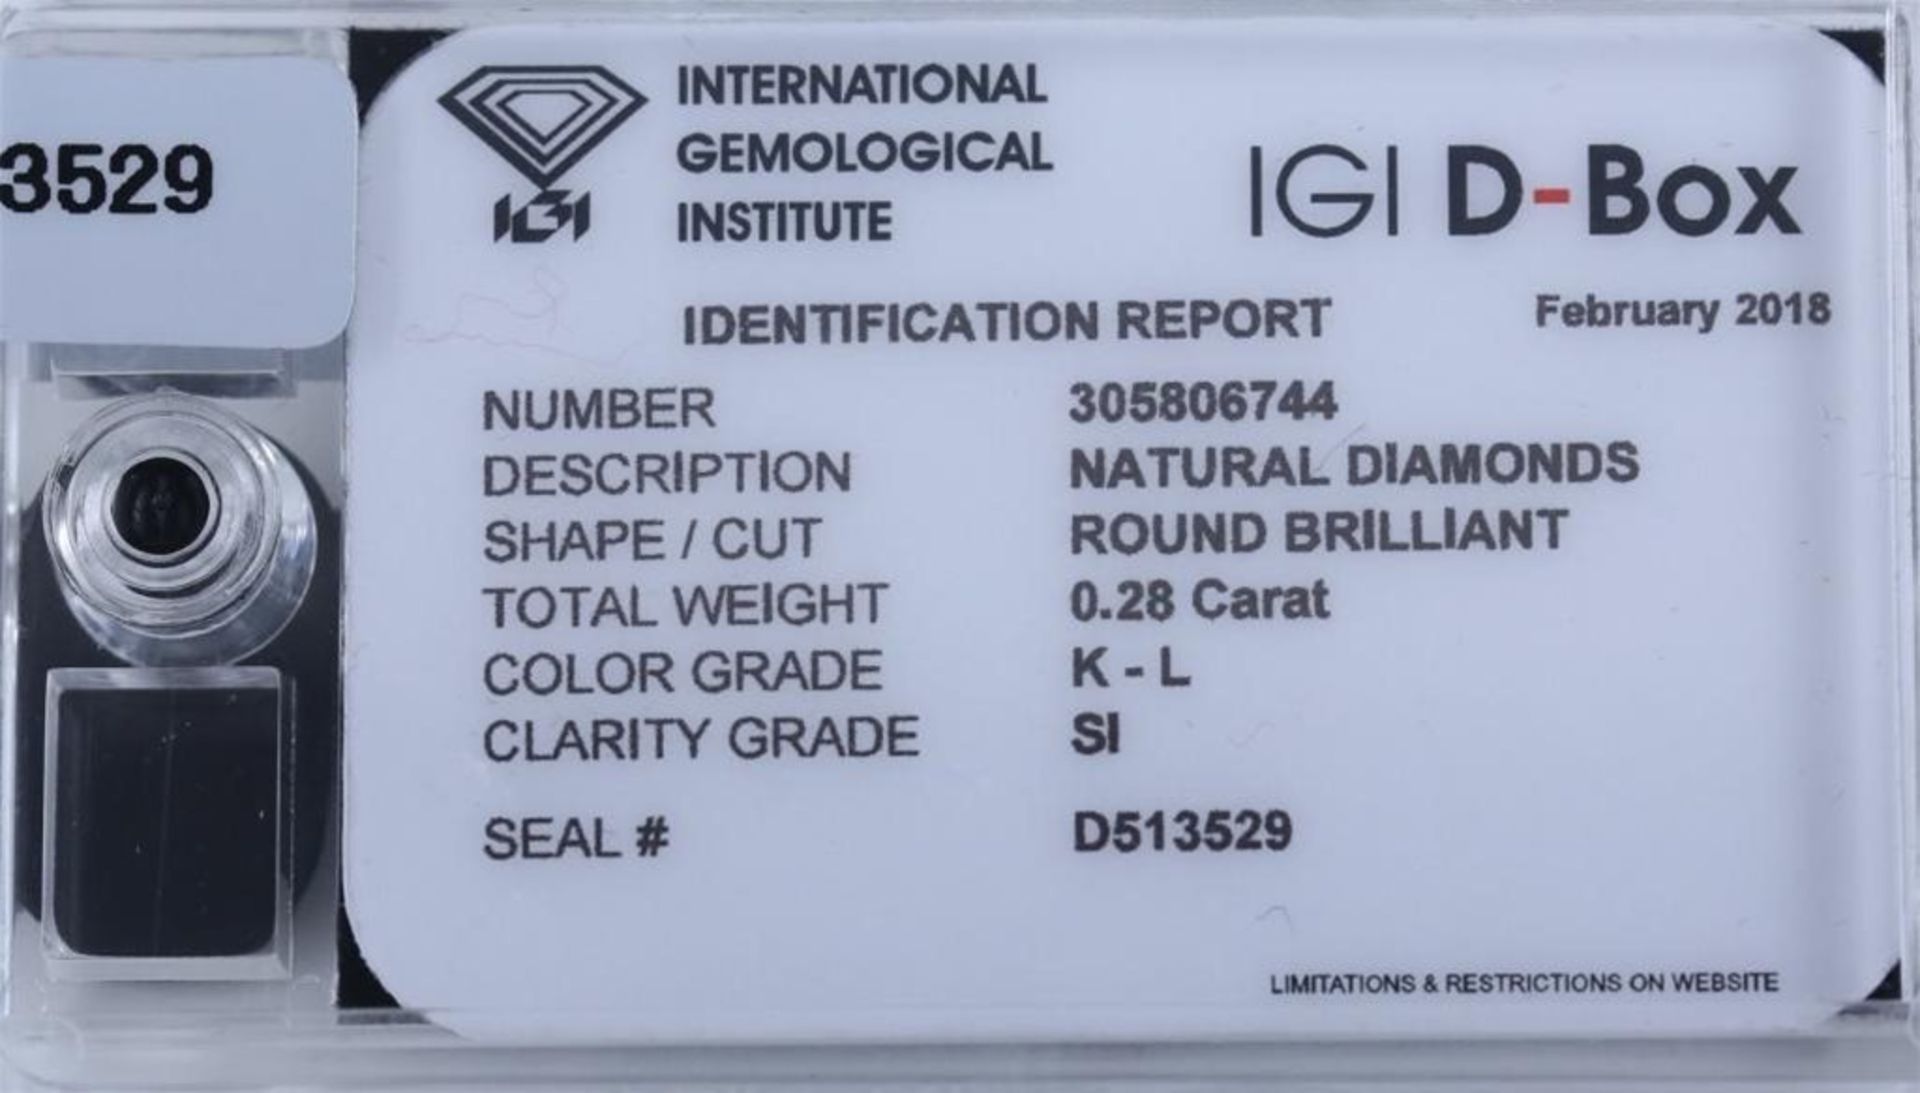 IGI Sealed 0.28 ct. "Diamond D-Box" - Round Brilliant Natural Diamonds - Image 2 of 4